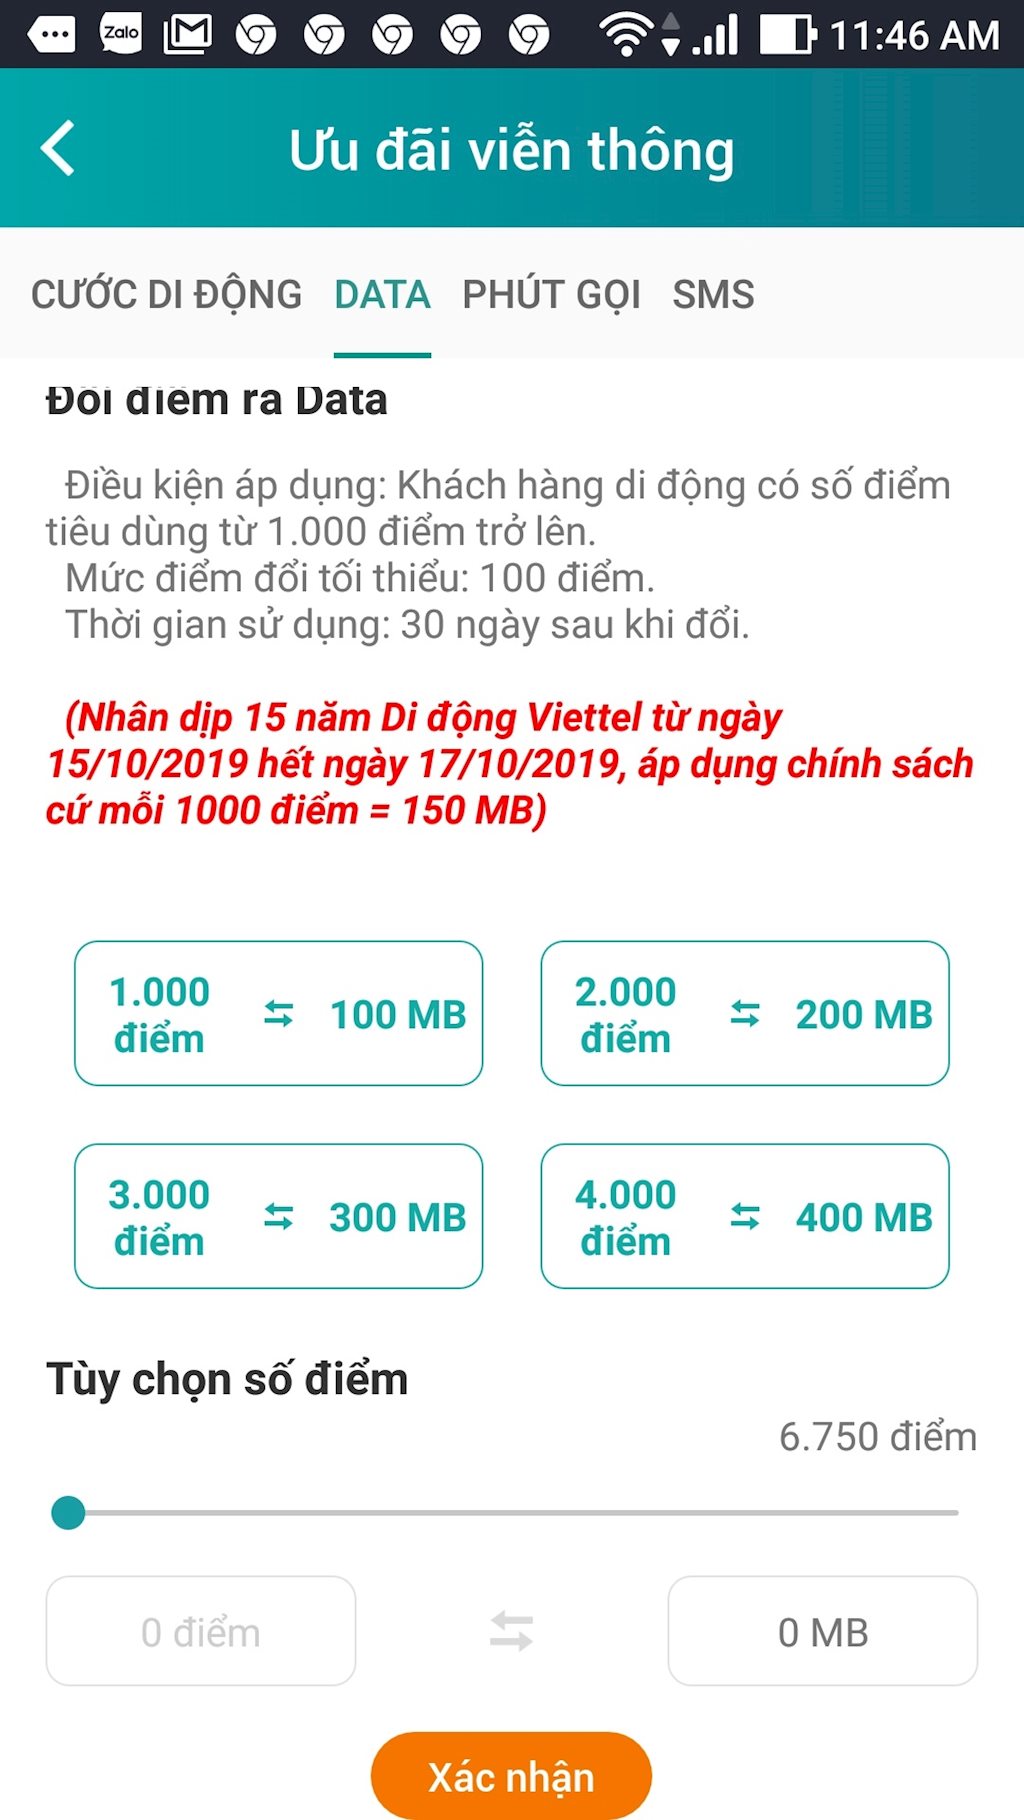 b2-huong-dan-doi-diem-viettel-lay-data-sang-sms-cach-doi-diem-viettel-plus-lay-the-cao-sang-phut-goi-screenshot_20191018-114622.jpg